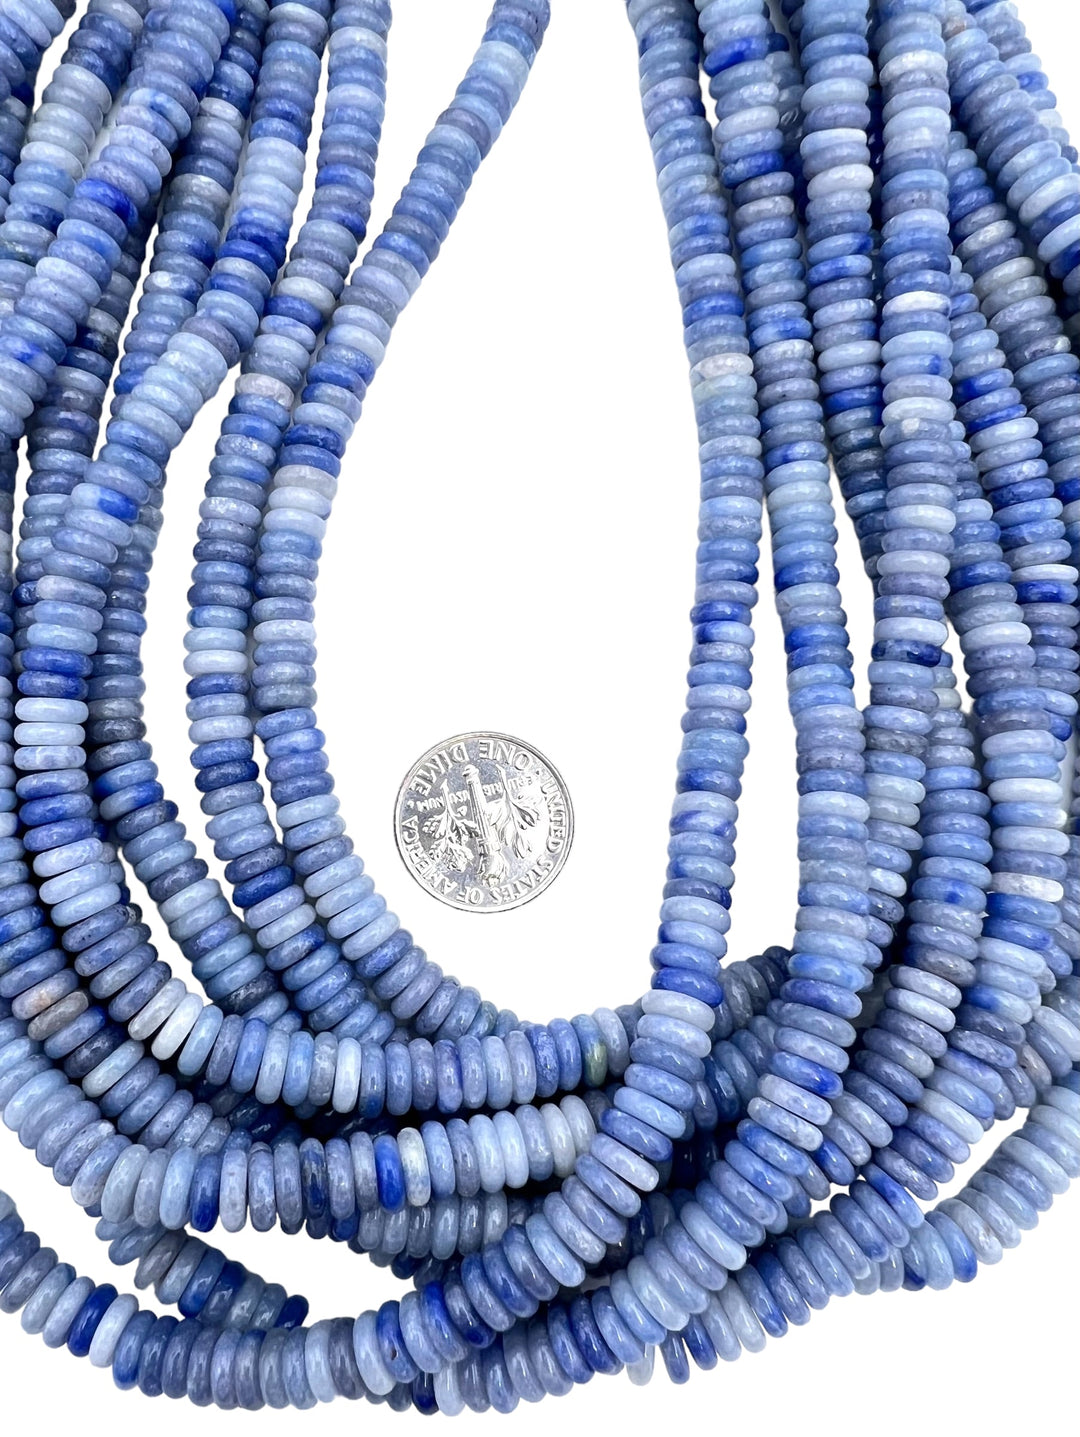 Blue Aventurine (Arizona) 2x6mm Rondelle/Wheel Beads 16inch